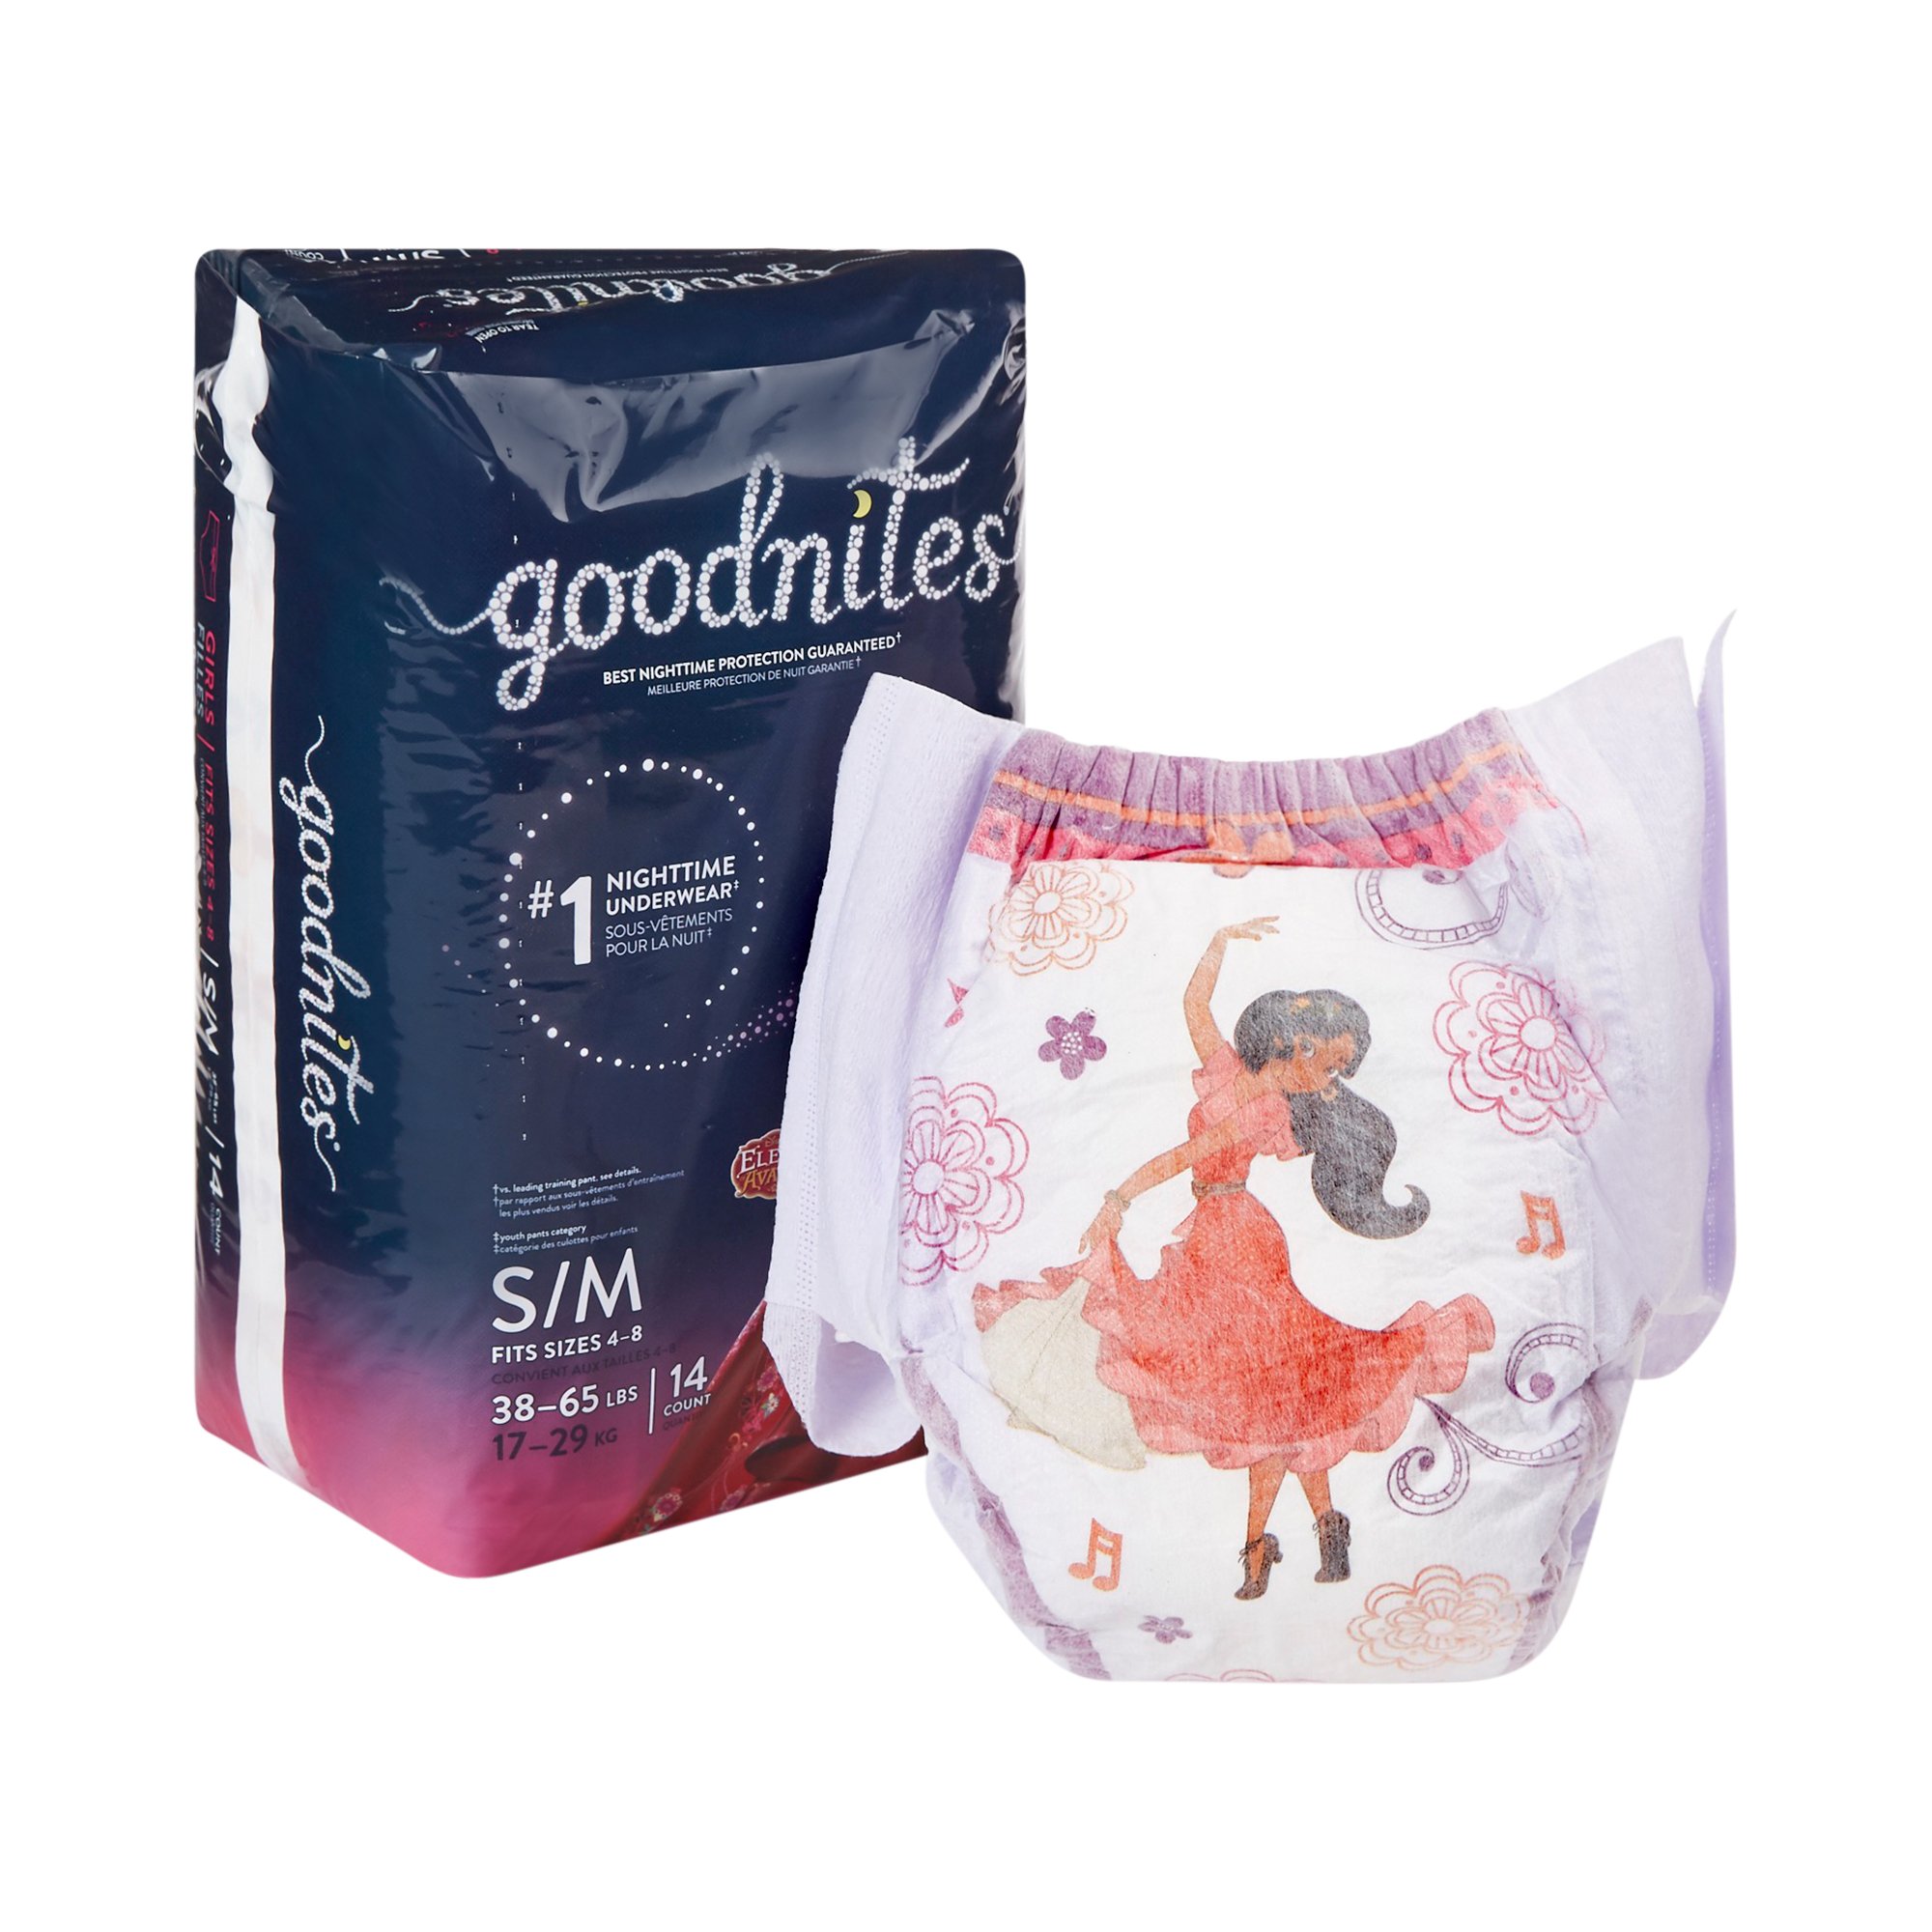 Best of Girls in goodnites diapers